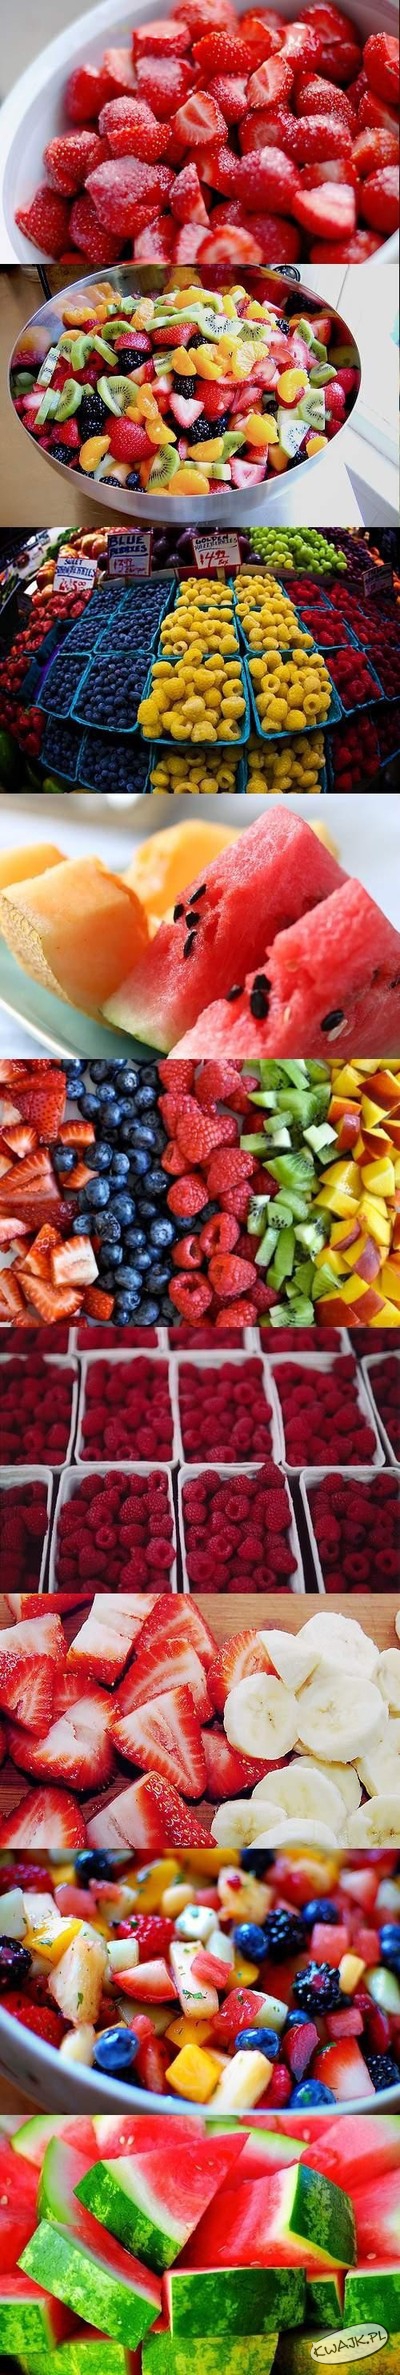 Kocham owoce!